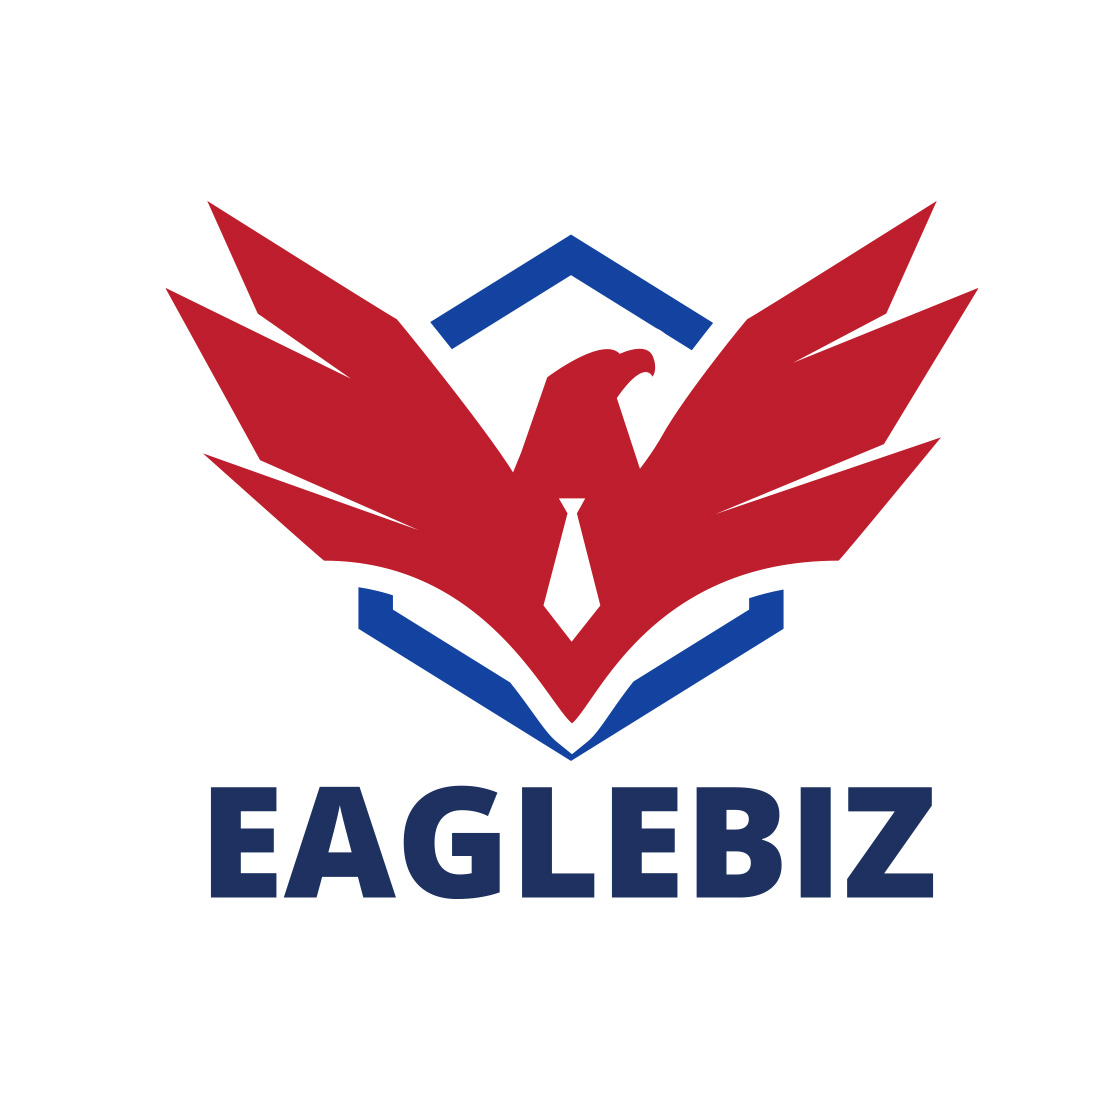 Eaglebiz logo design preview image.